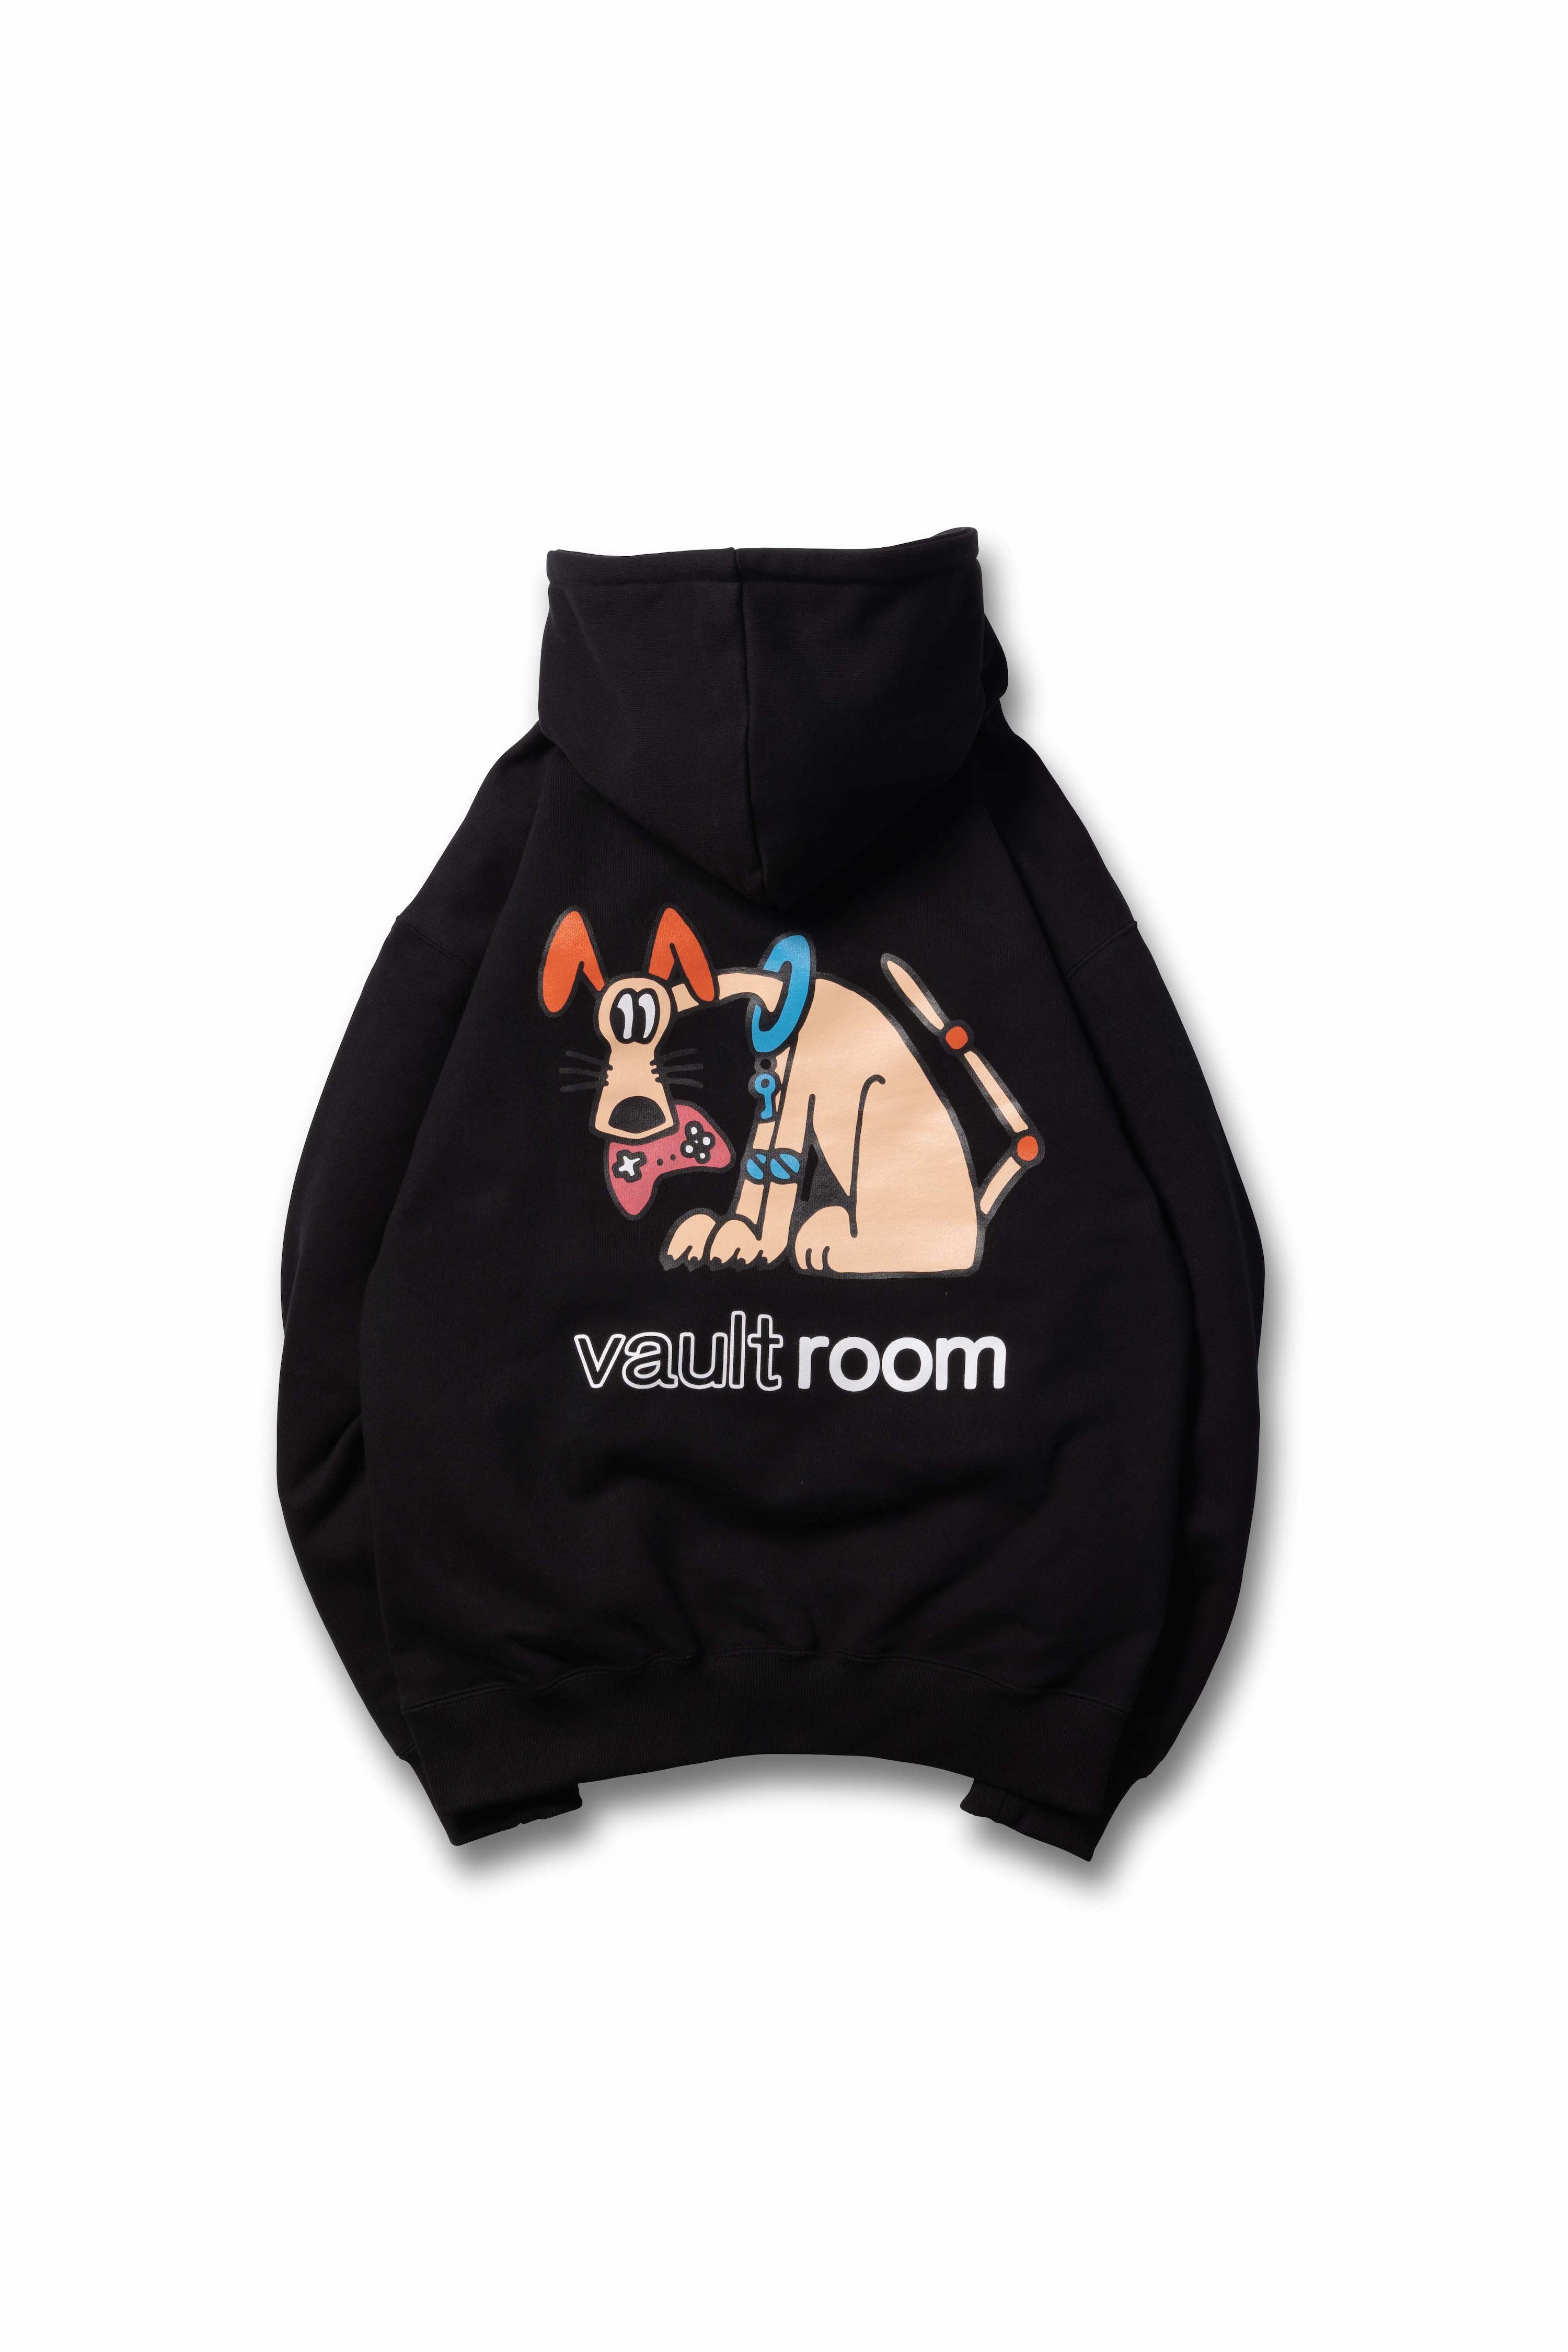 vaultroom KEY DOG HOODIE / BLKcotton100%